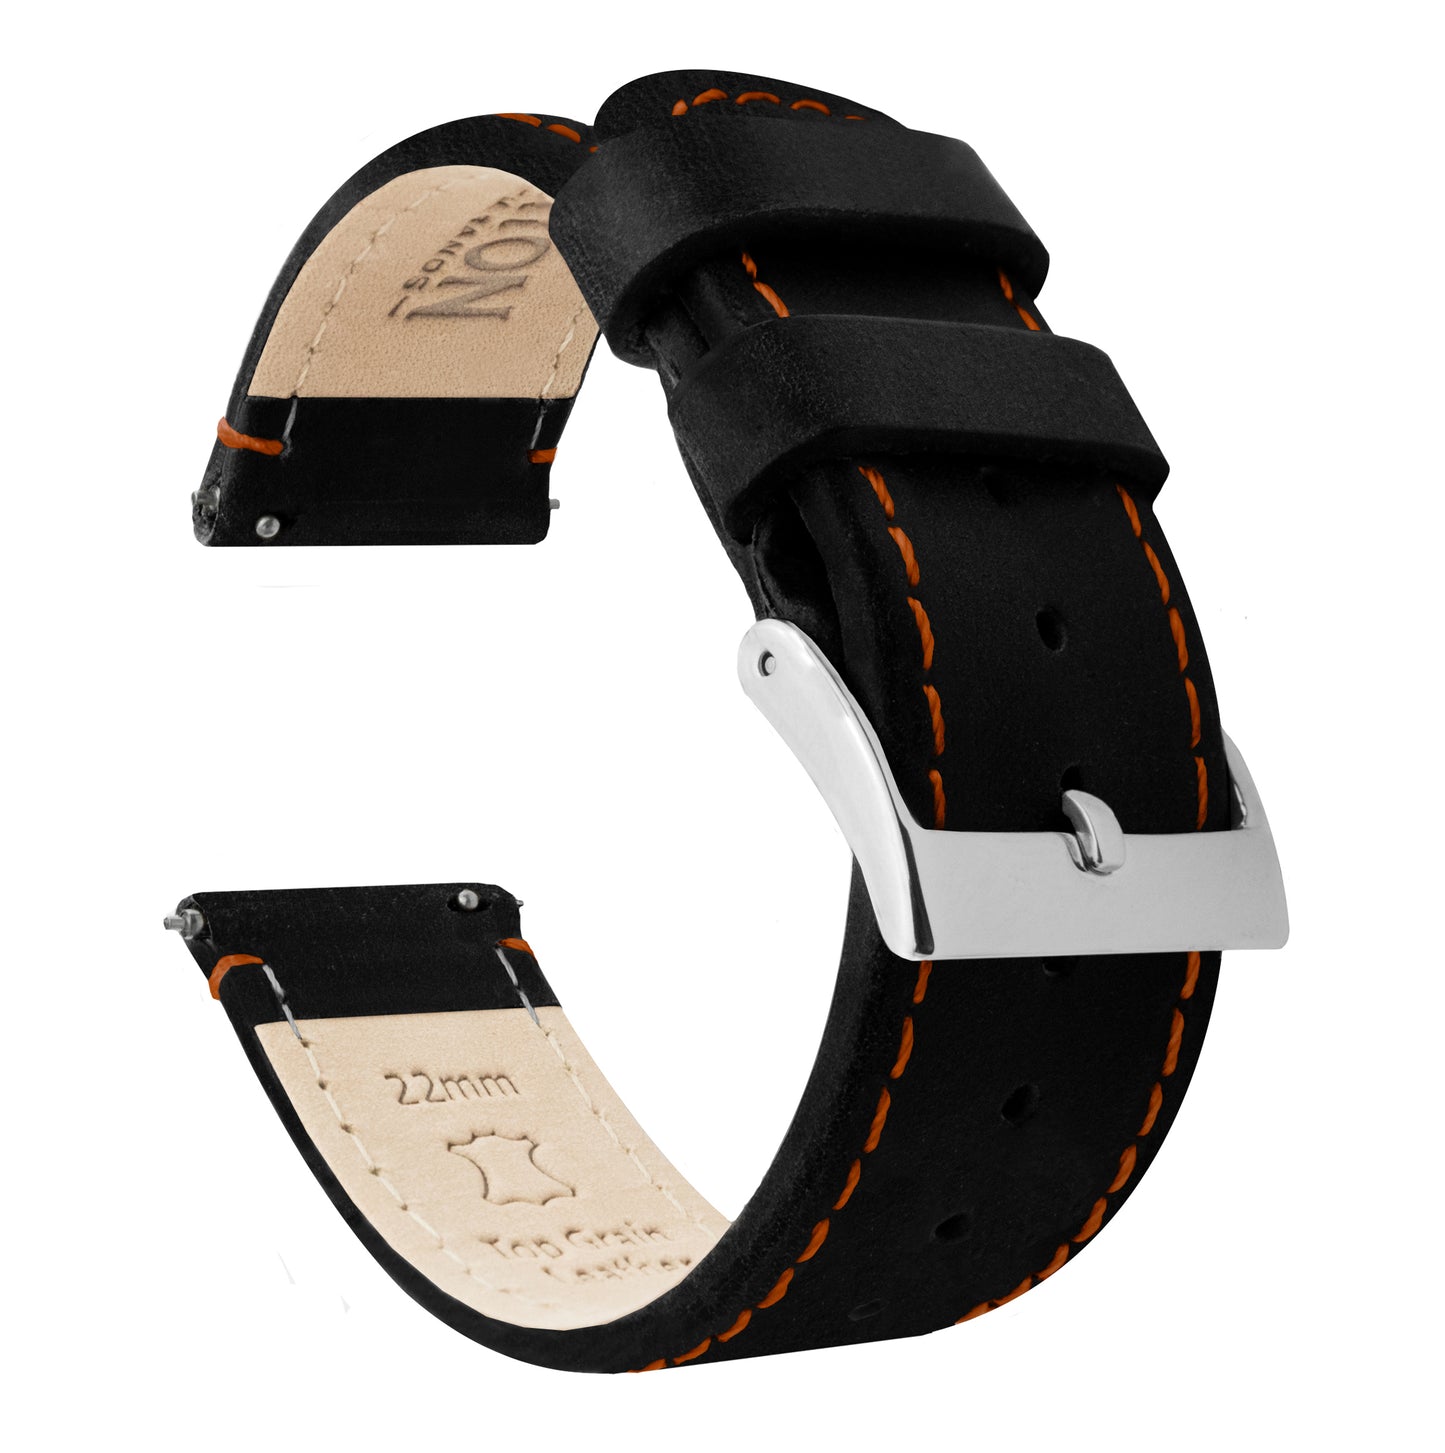 Timex Weekender Expedition Watches Black Leather Orange Stitching Watch Band